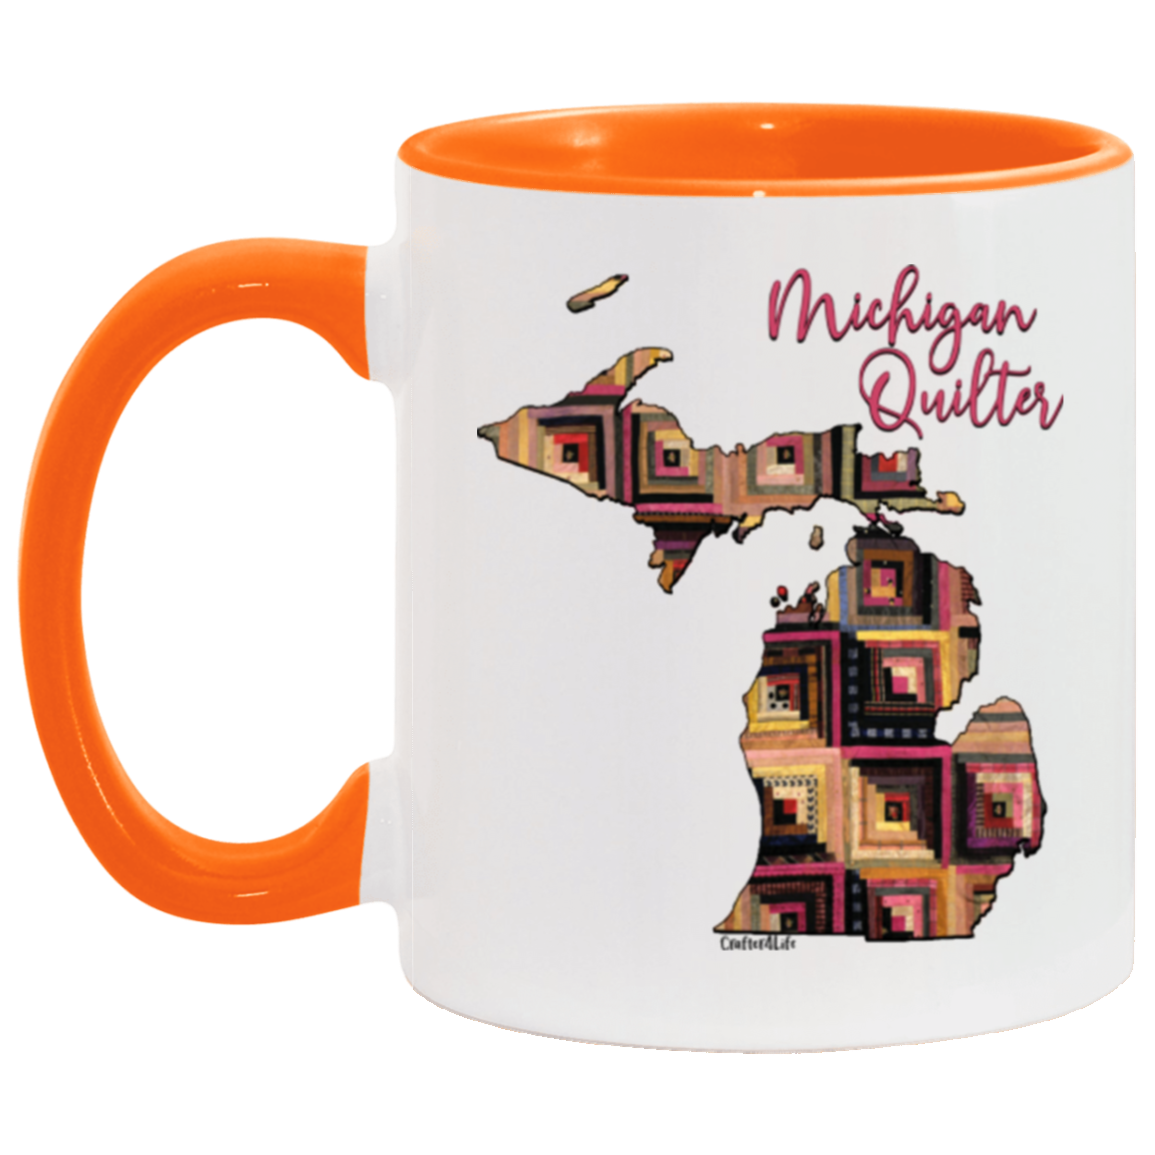 Michigan Quilter Mugs